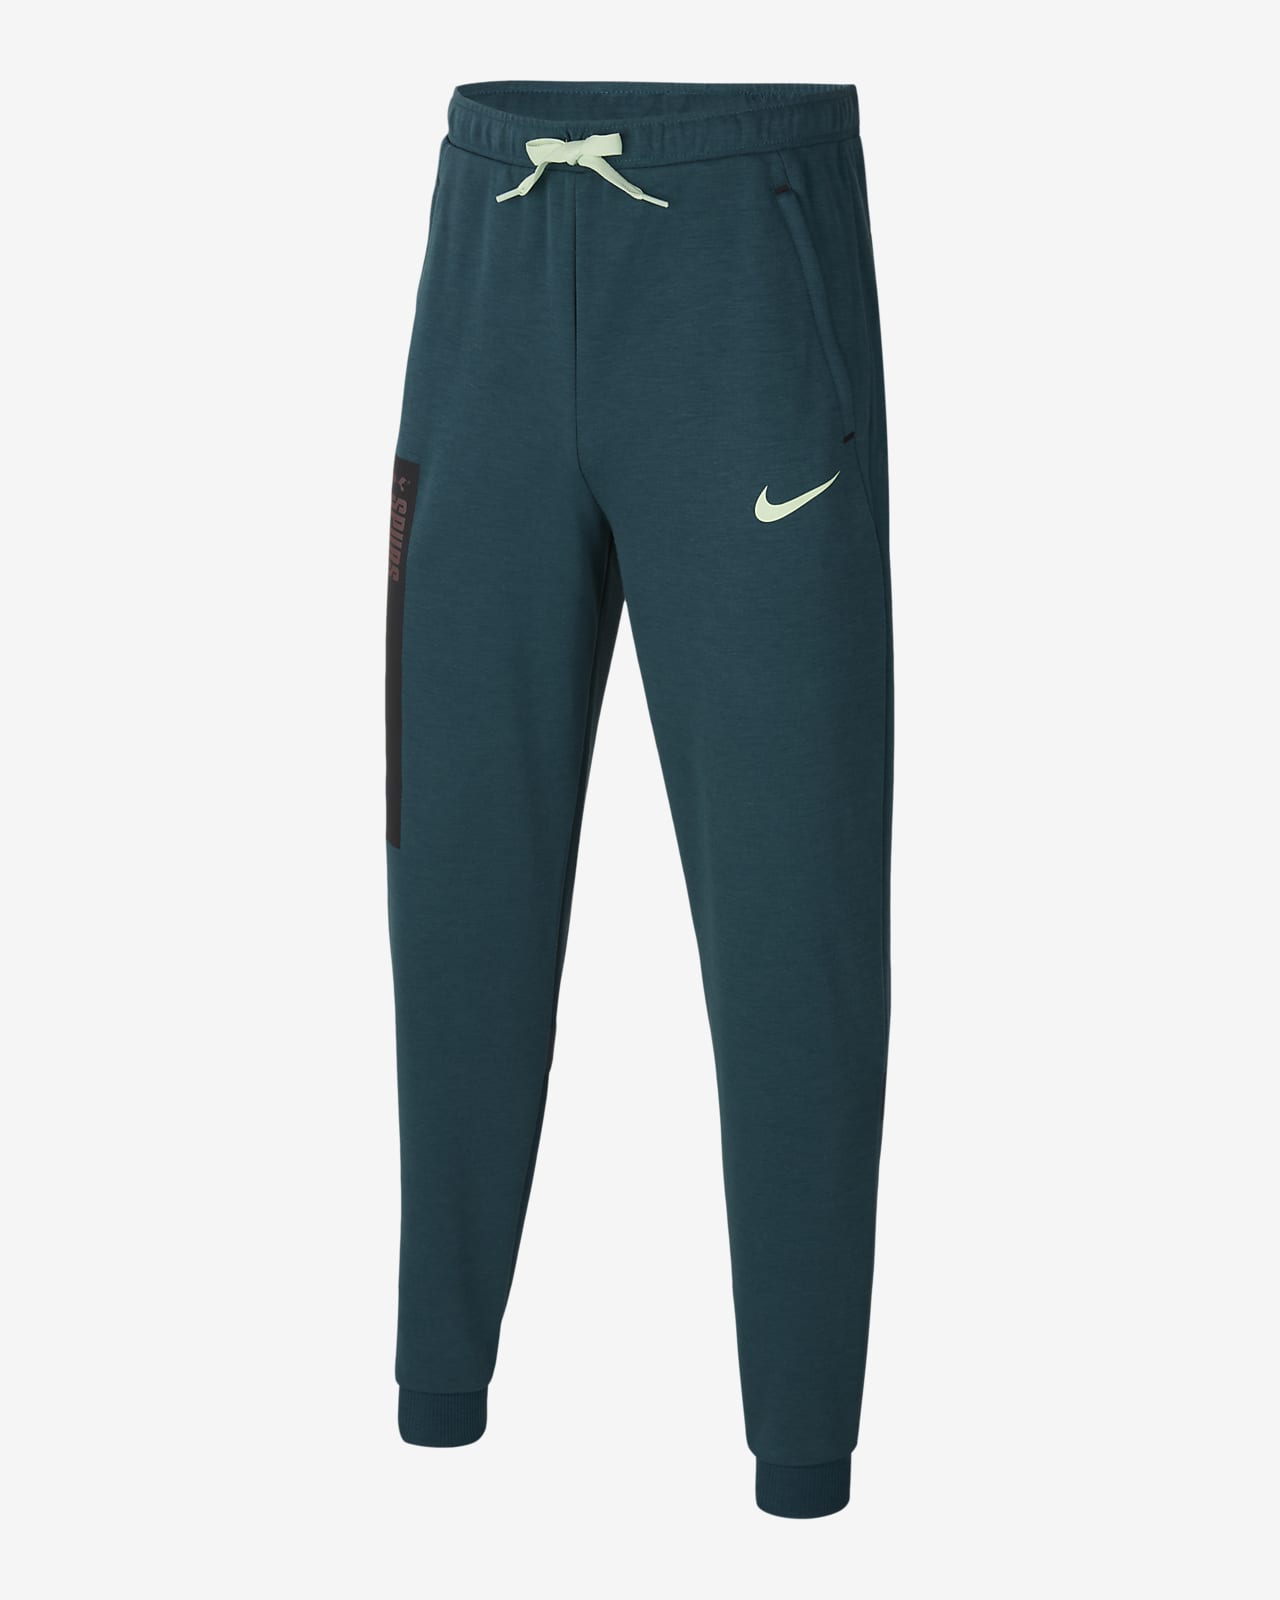 Tottenham Hotspur Older Kids' Nike Dri-FIT Fleece Football Pants